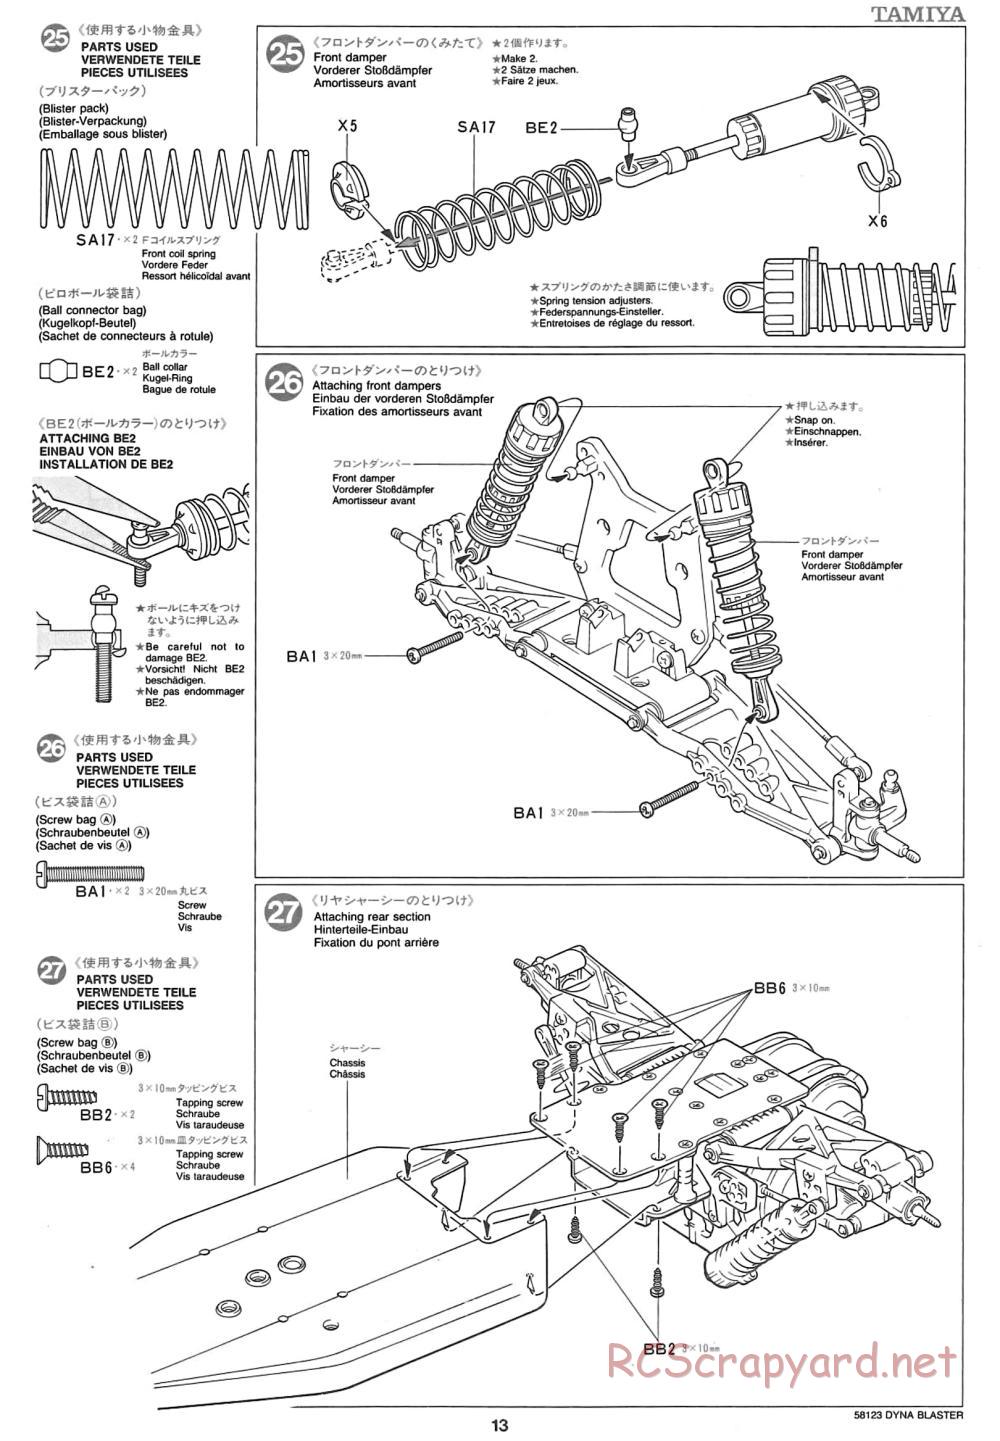 Tamiya - Dyna Blaster Chassis - Manual - Page 13